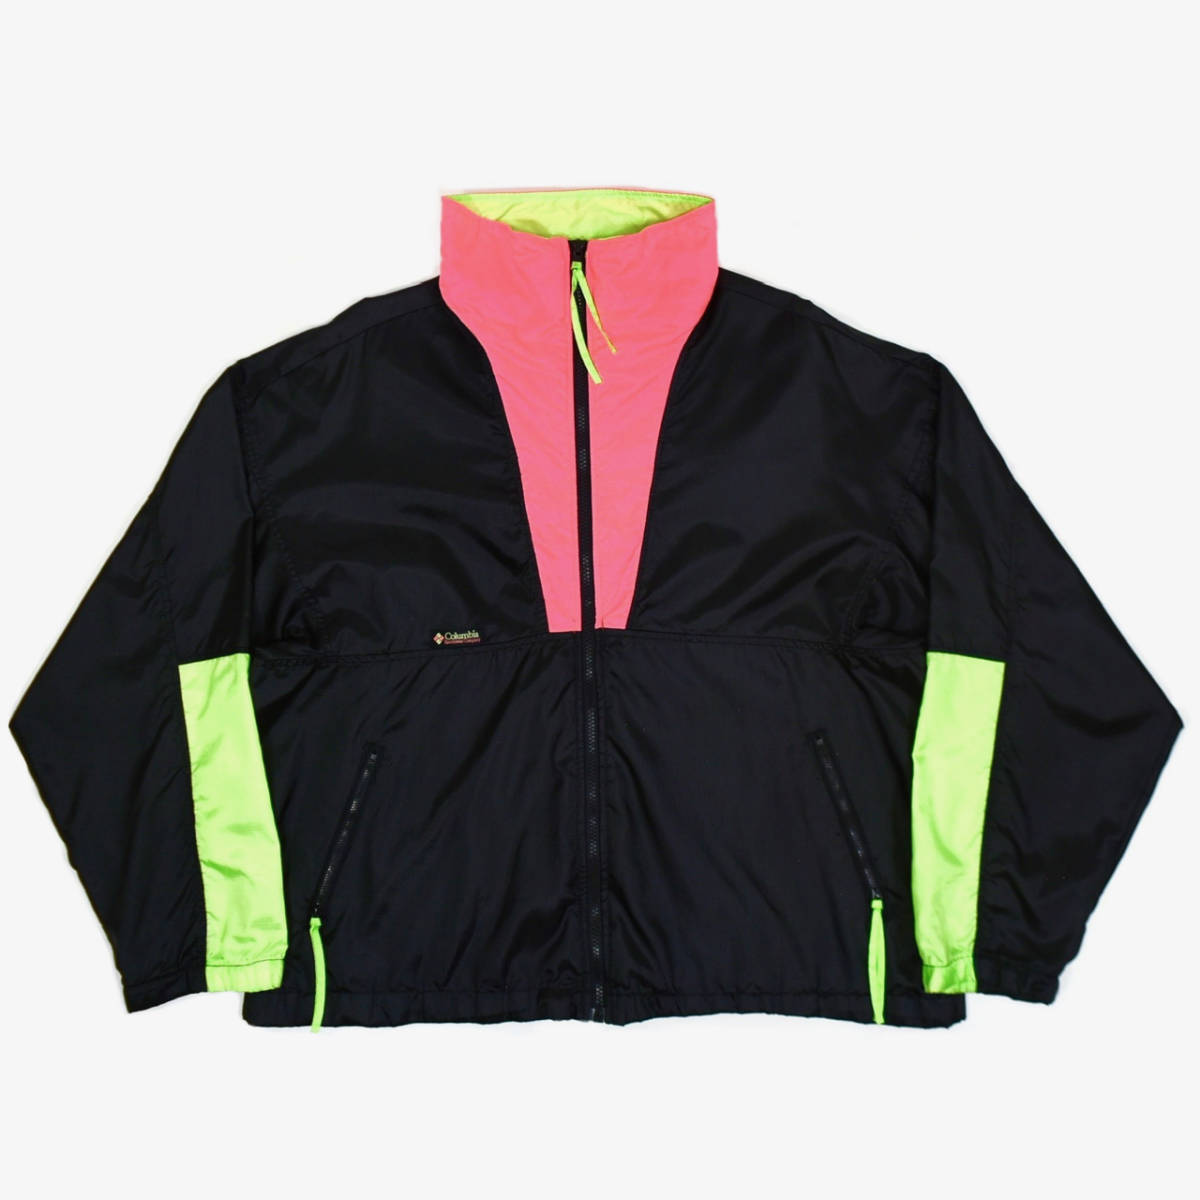 1990s COLUMBIA Nylon jacket L Black オールドコロンビア ナイロンジャケット ブラック 黒 紺タグ 蛍光 アウトドア